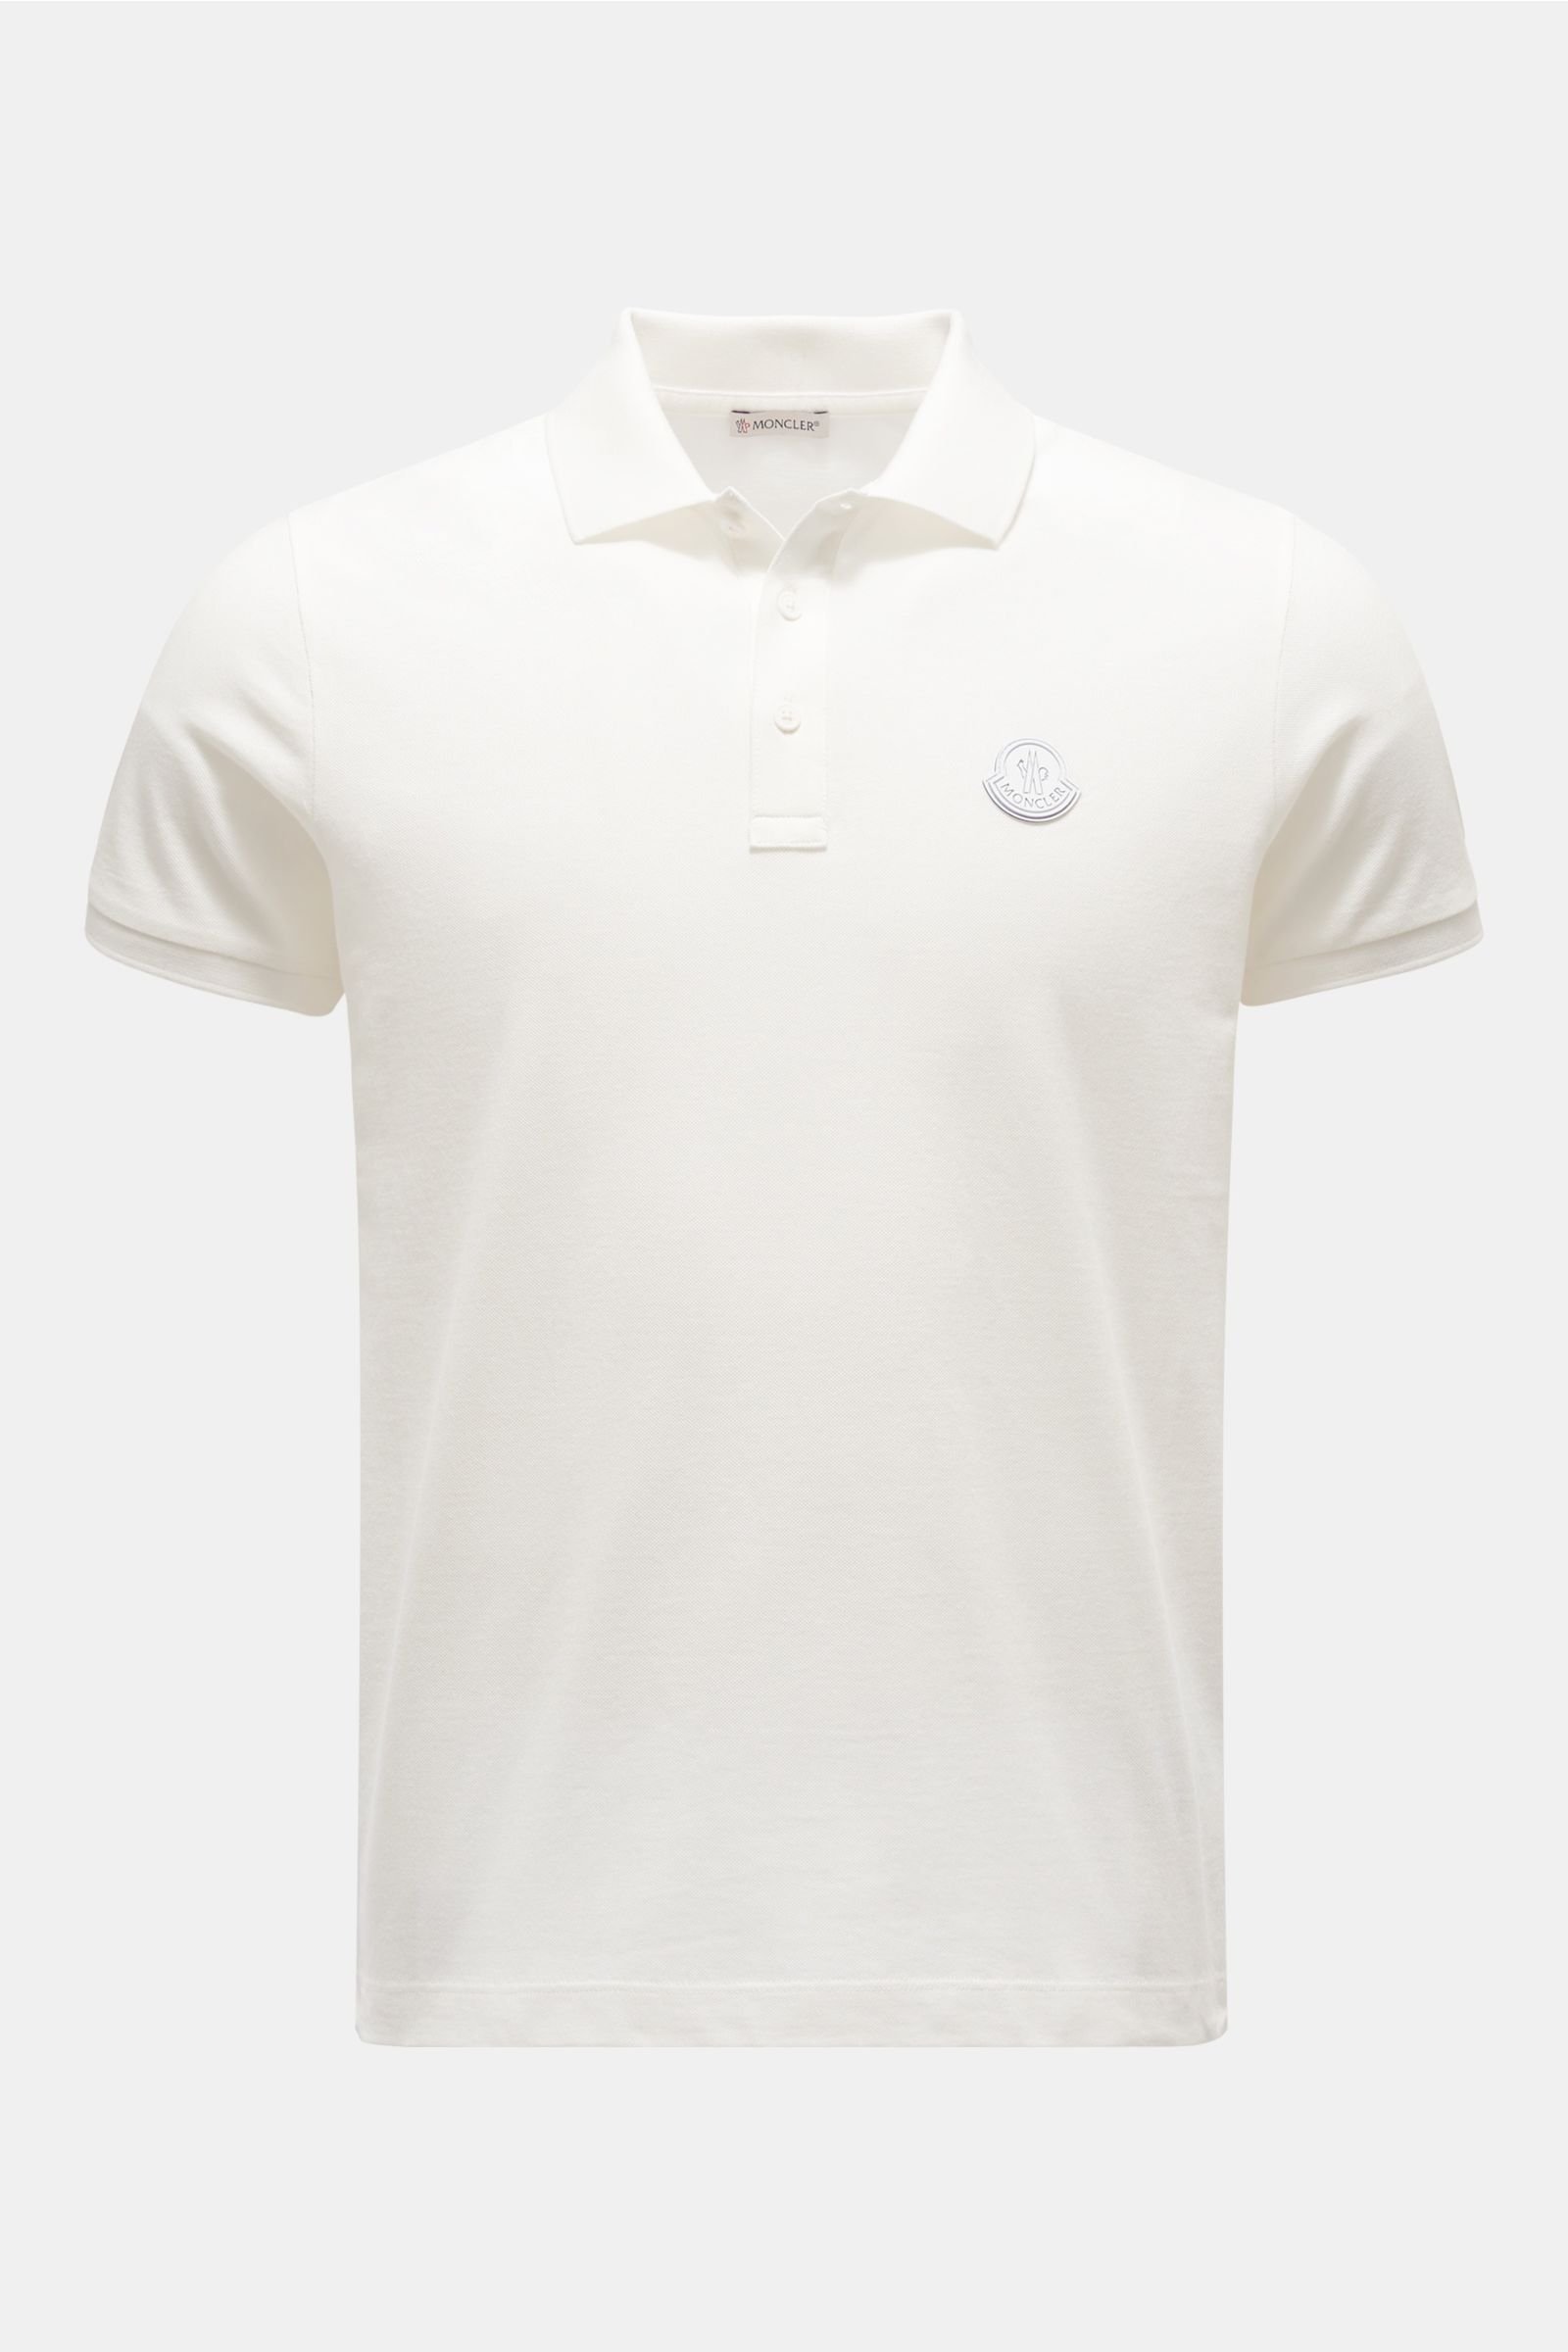 MONCLER polo shirt off-white | BRAUN Hamburg